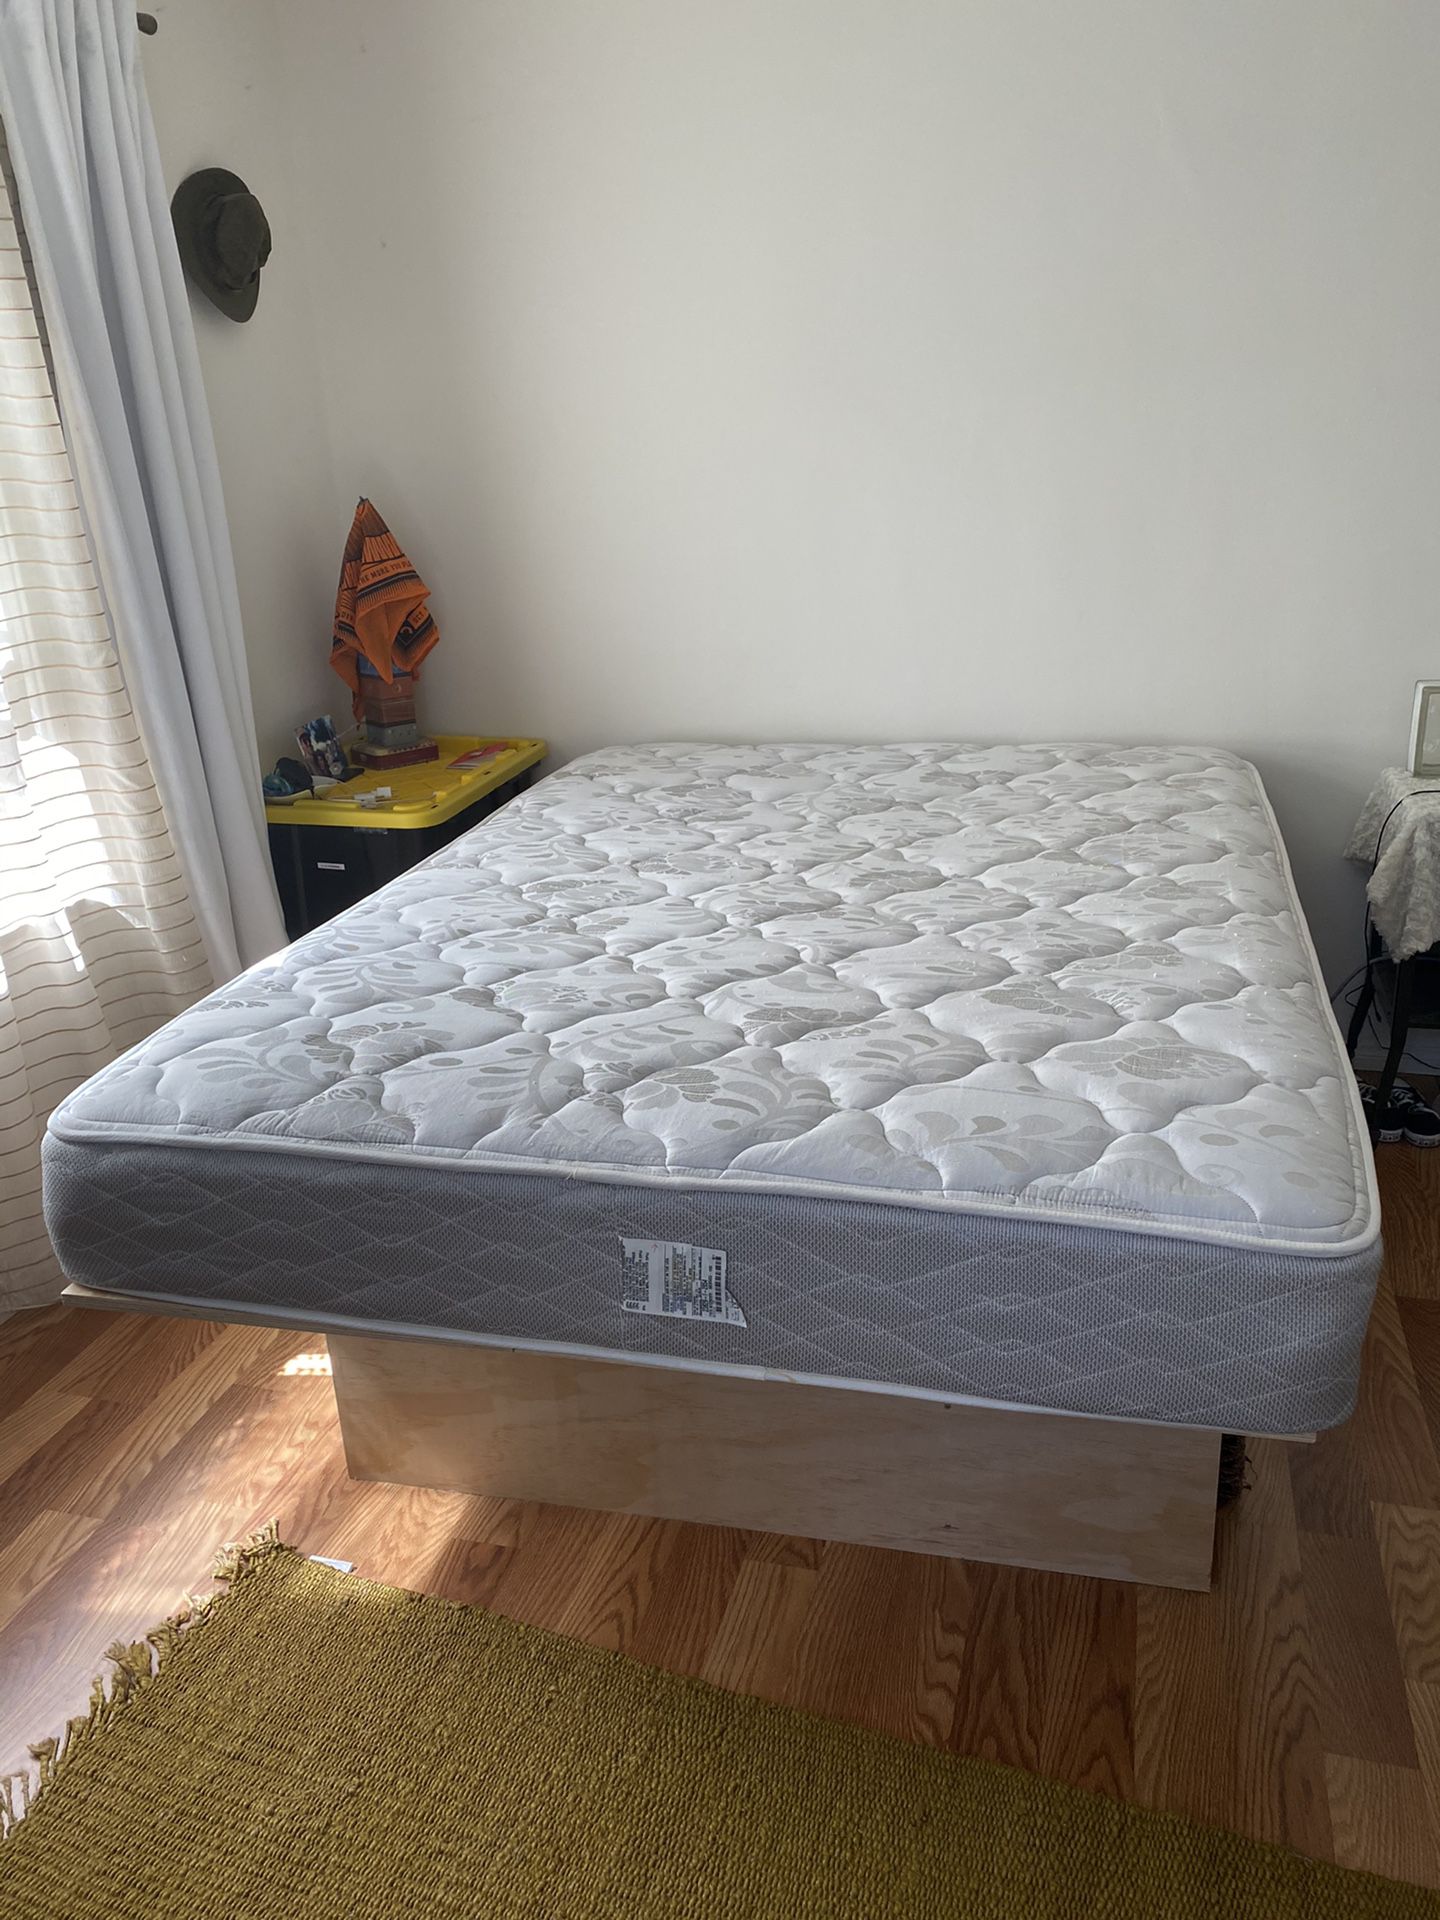 Queen mattress + Minimal plywood bed frame